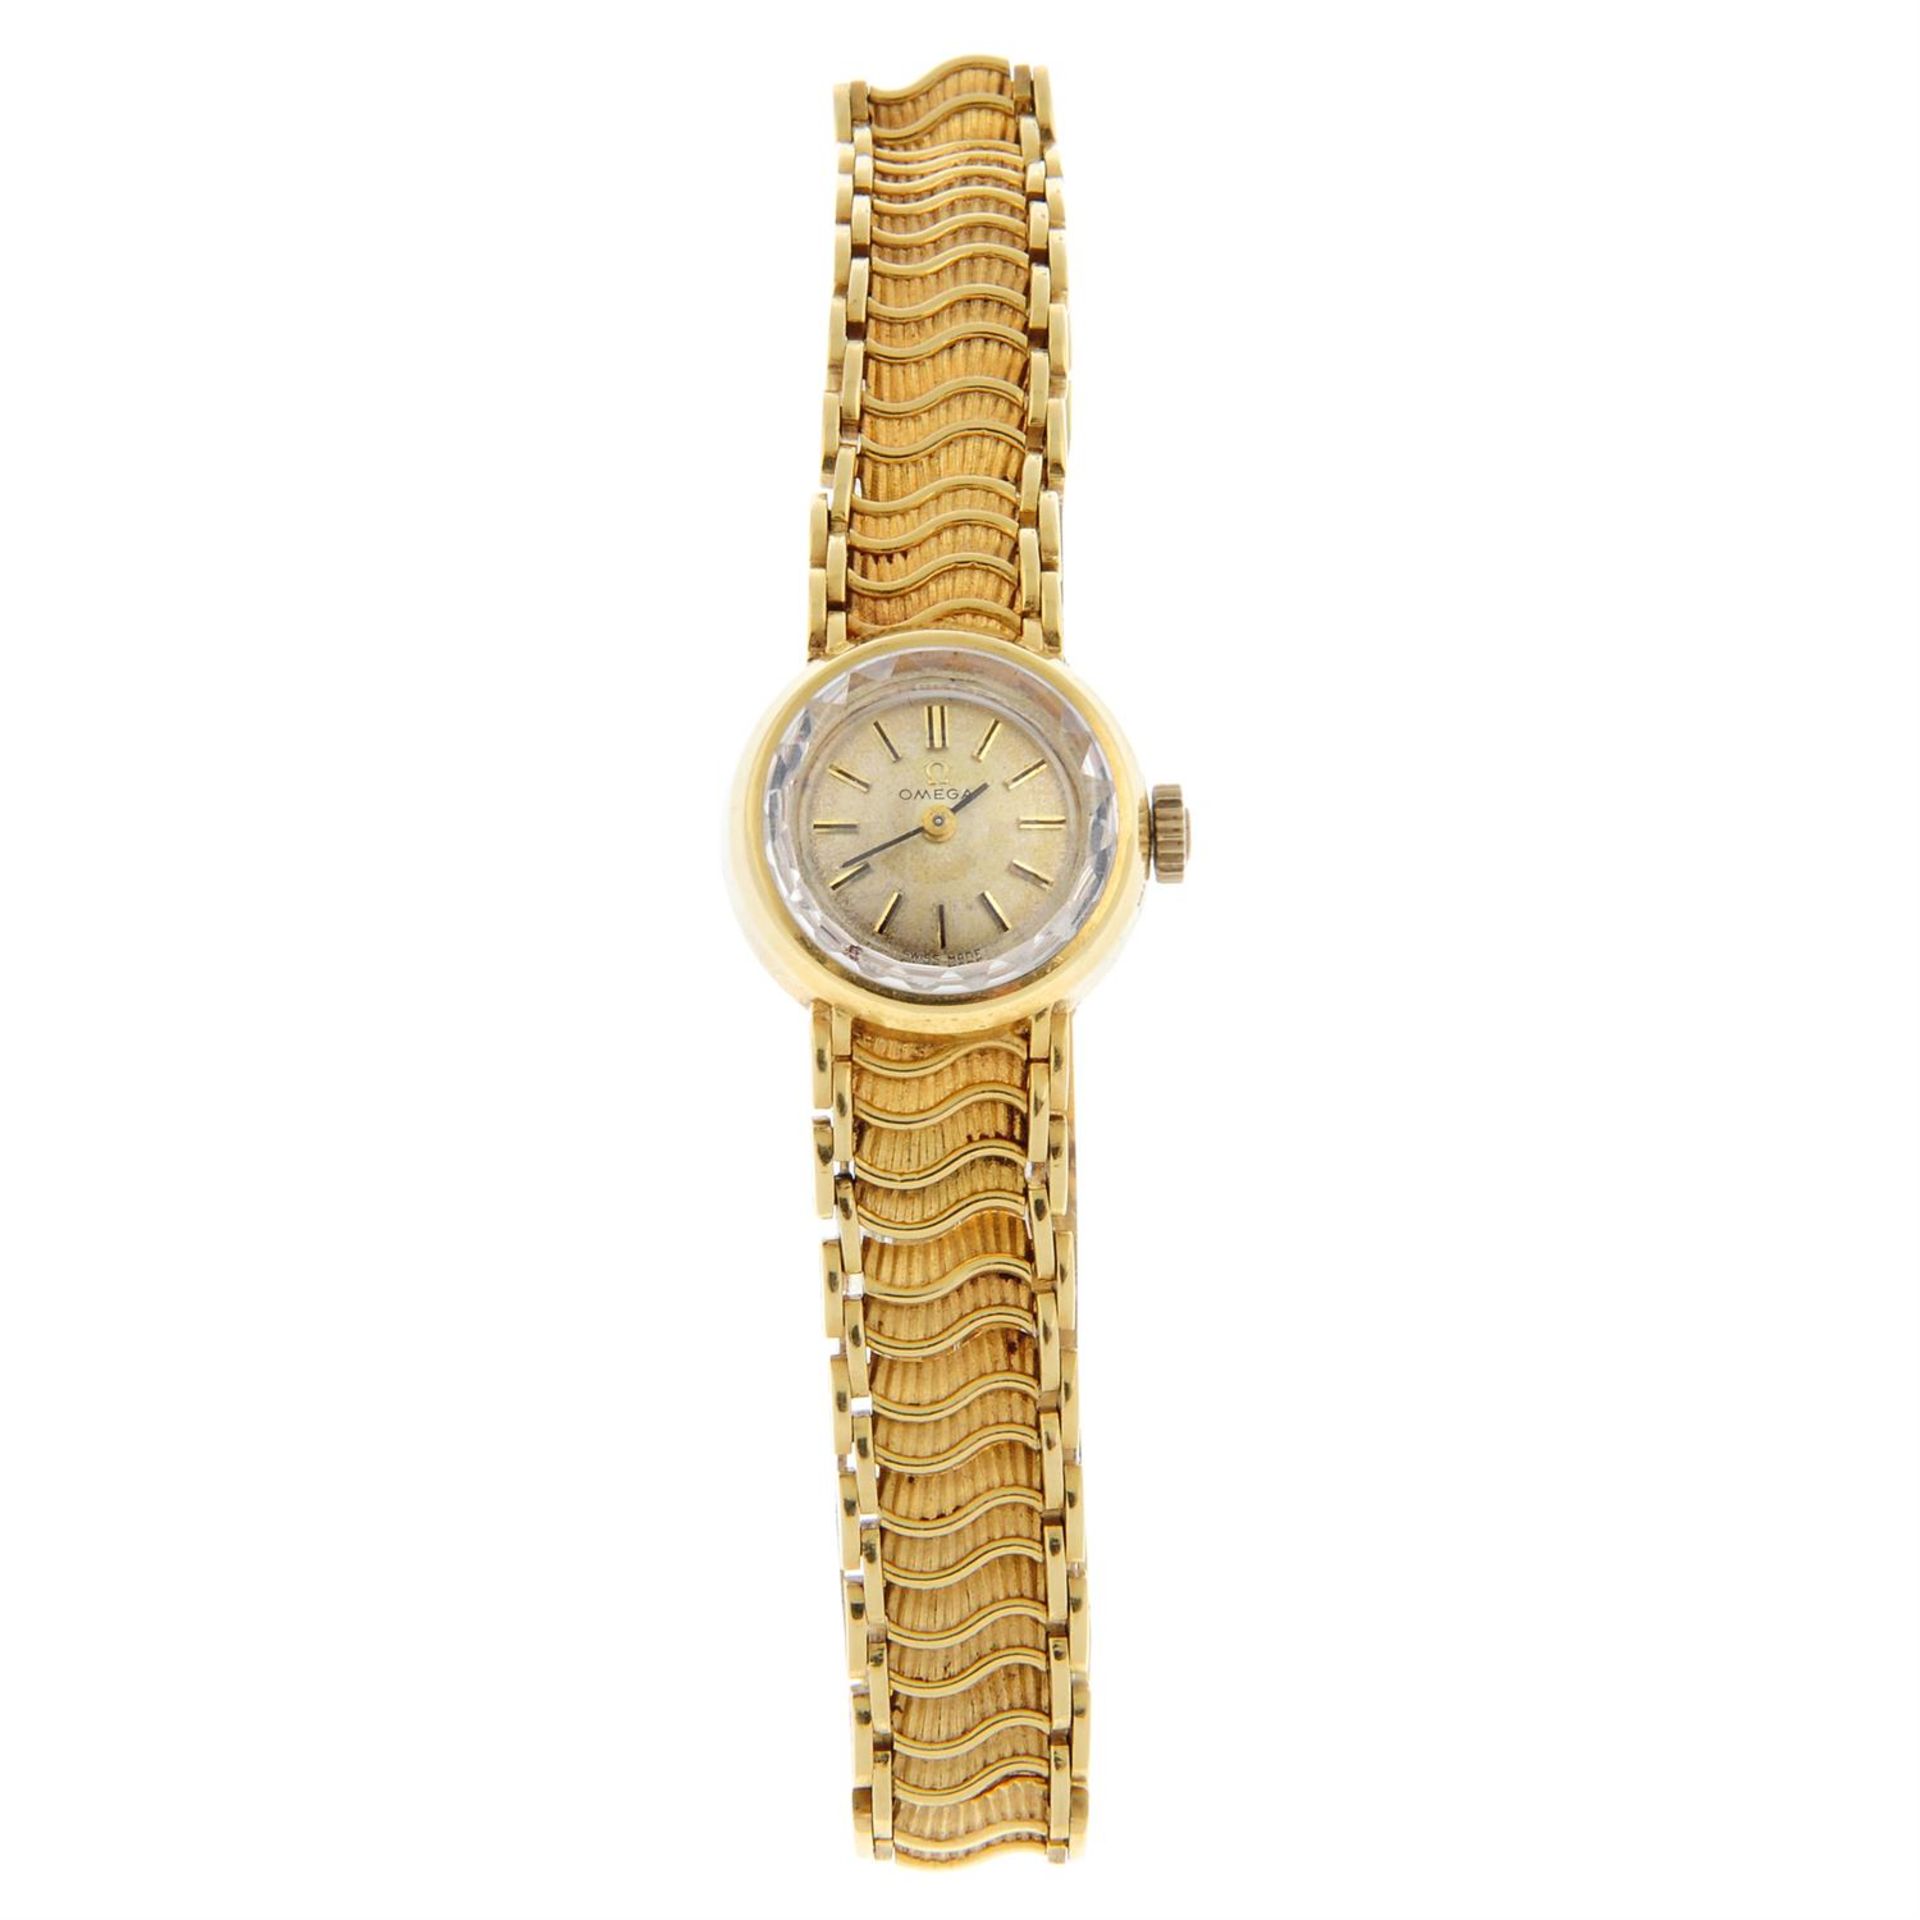 OMEGA - an 18ct yellow gold bracelet watch, 17mm.